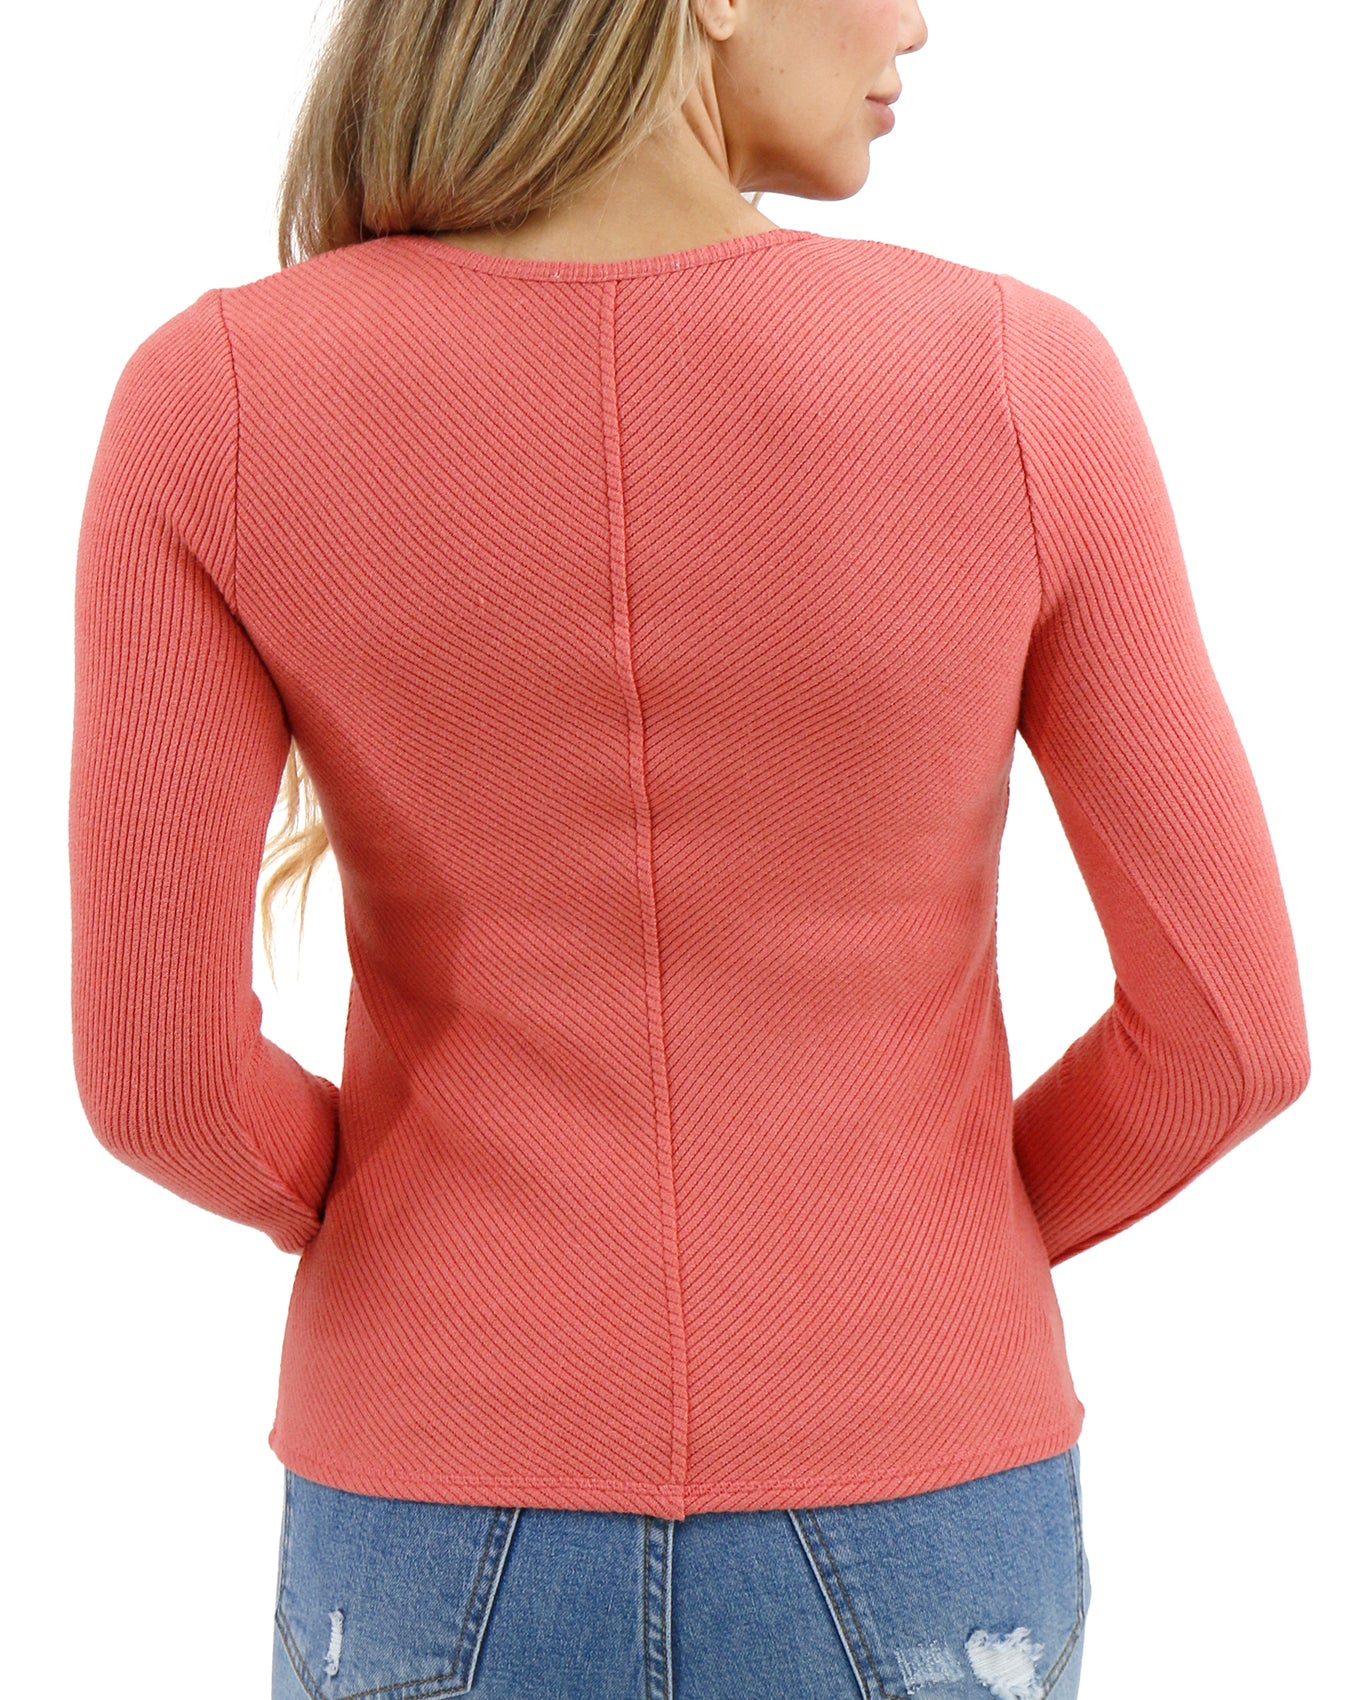 Back stock shot of Lantana Bloom Chic Spring Ribbed Sweater